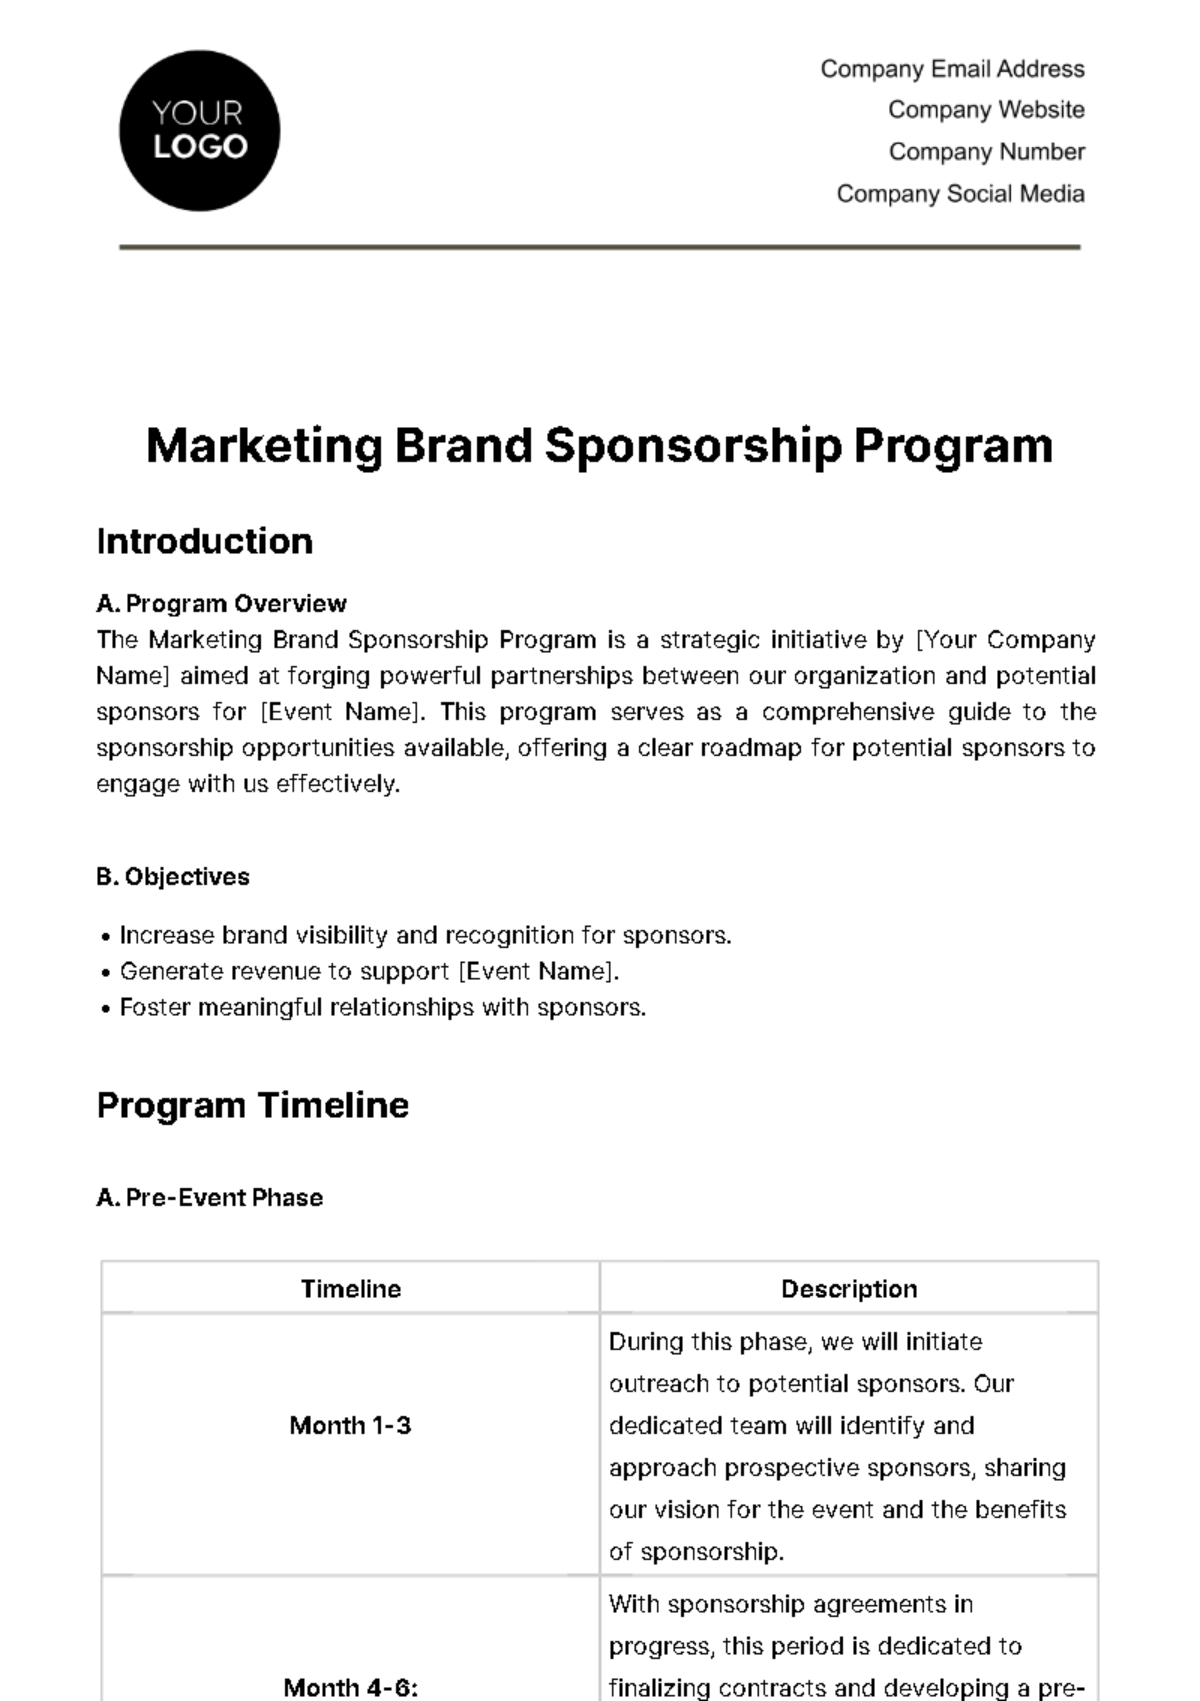 Marketing Brand Sponsorship Program Template